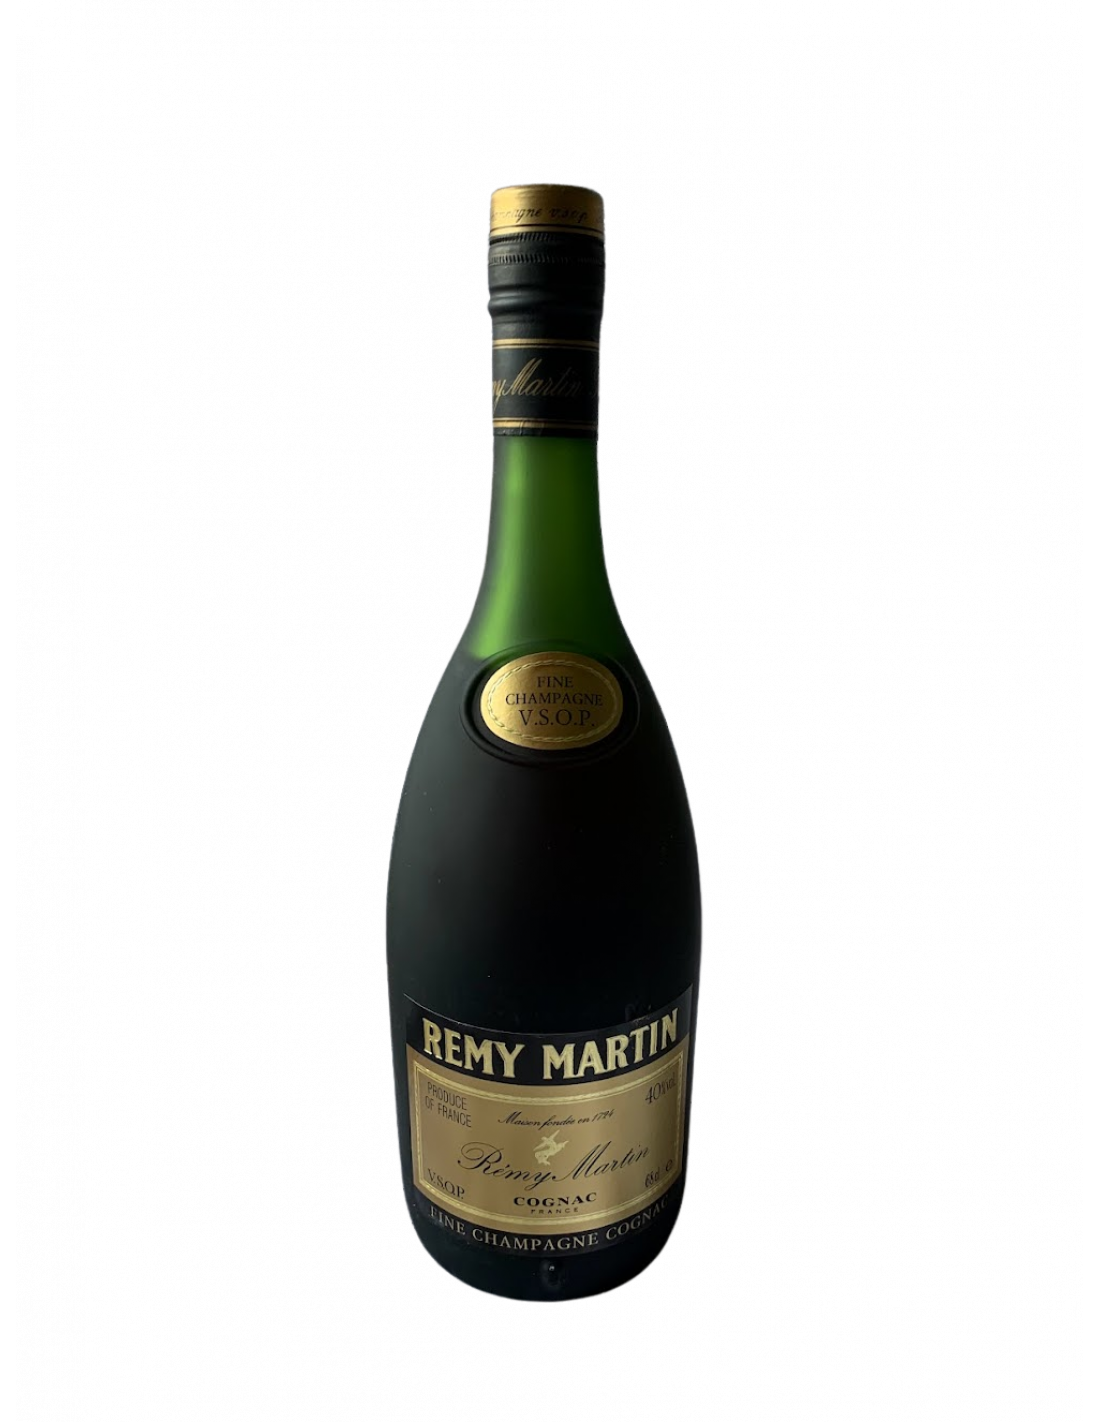 Champagne Cognac | Fine Remy cabinet7 Martin VSOP